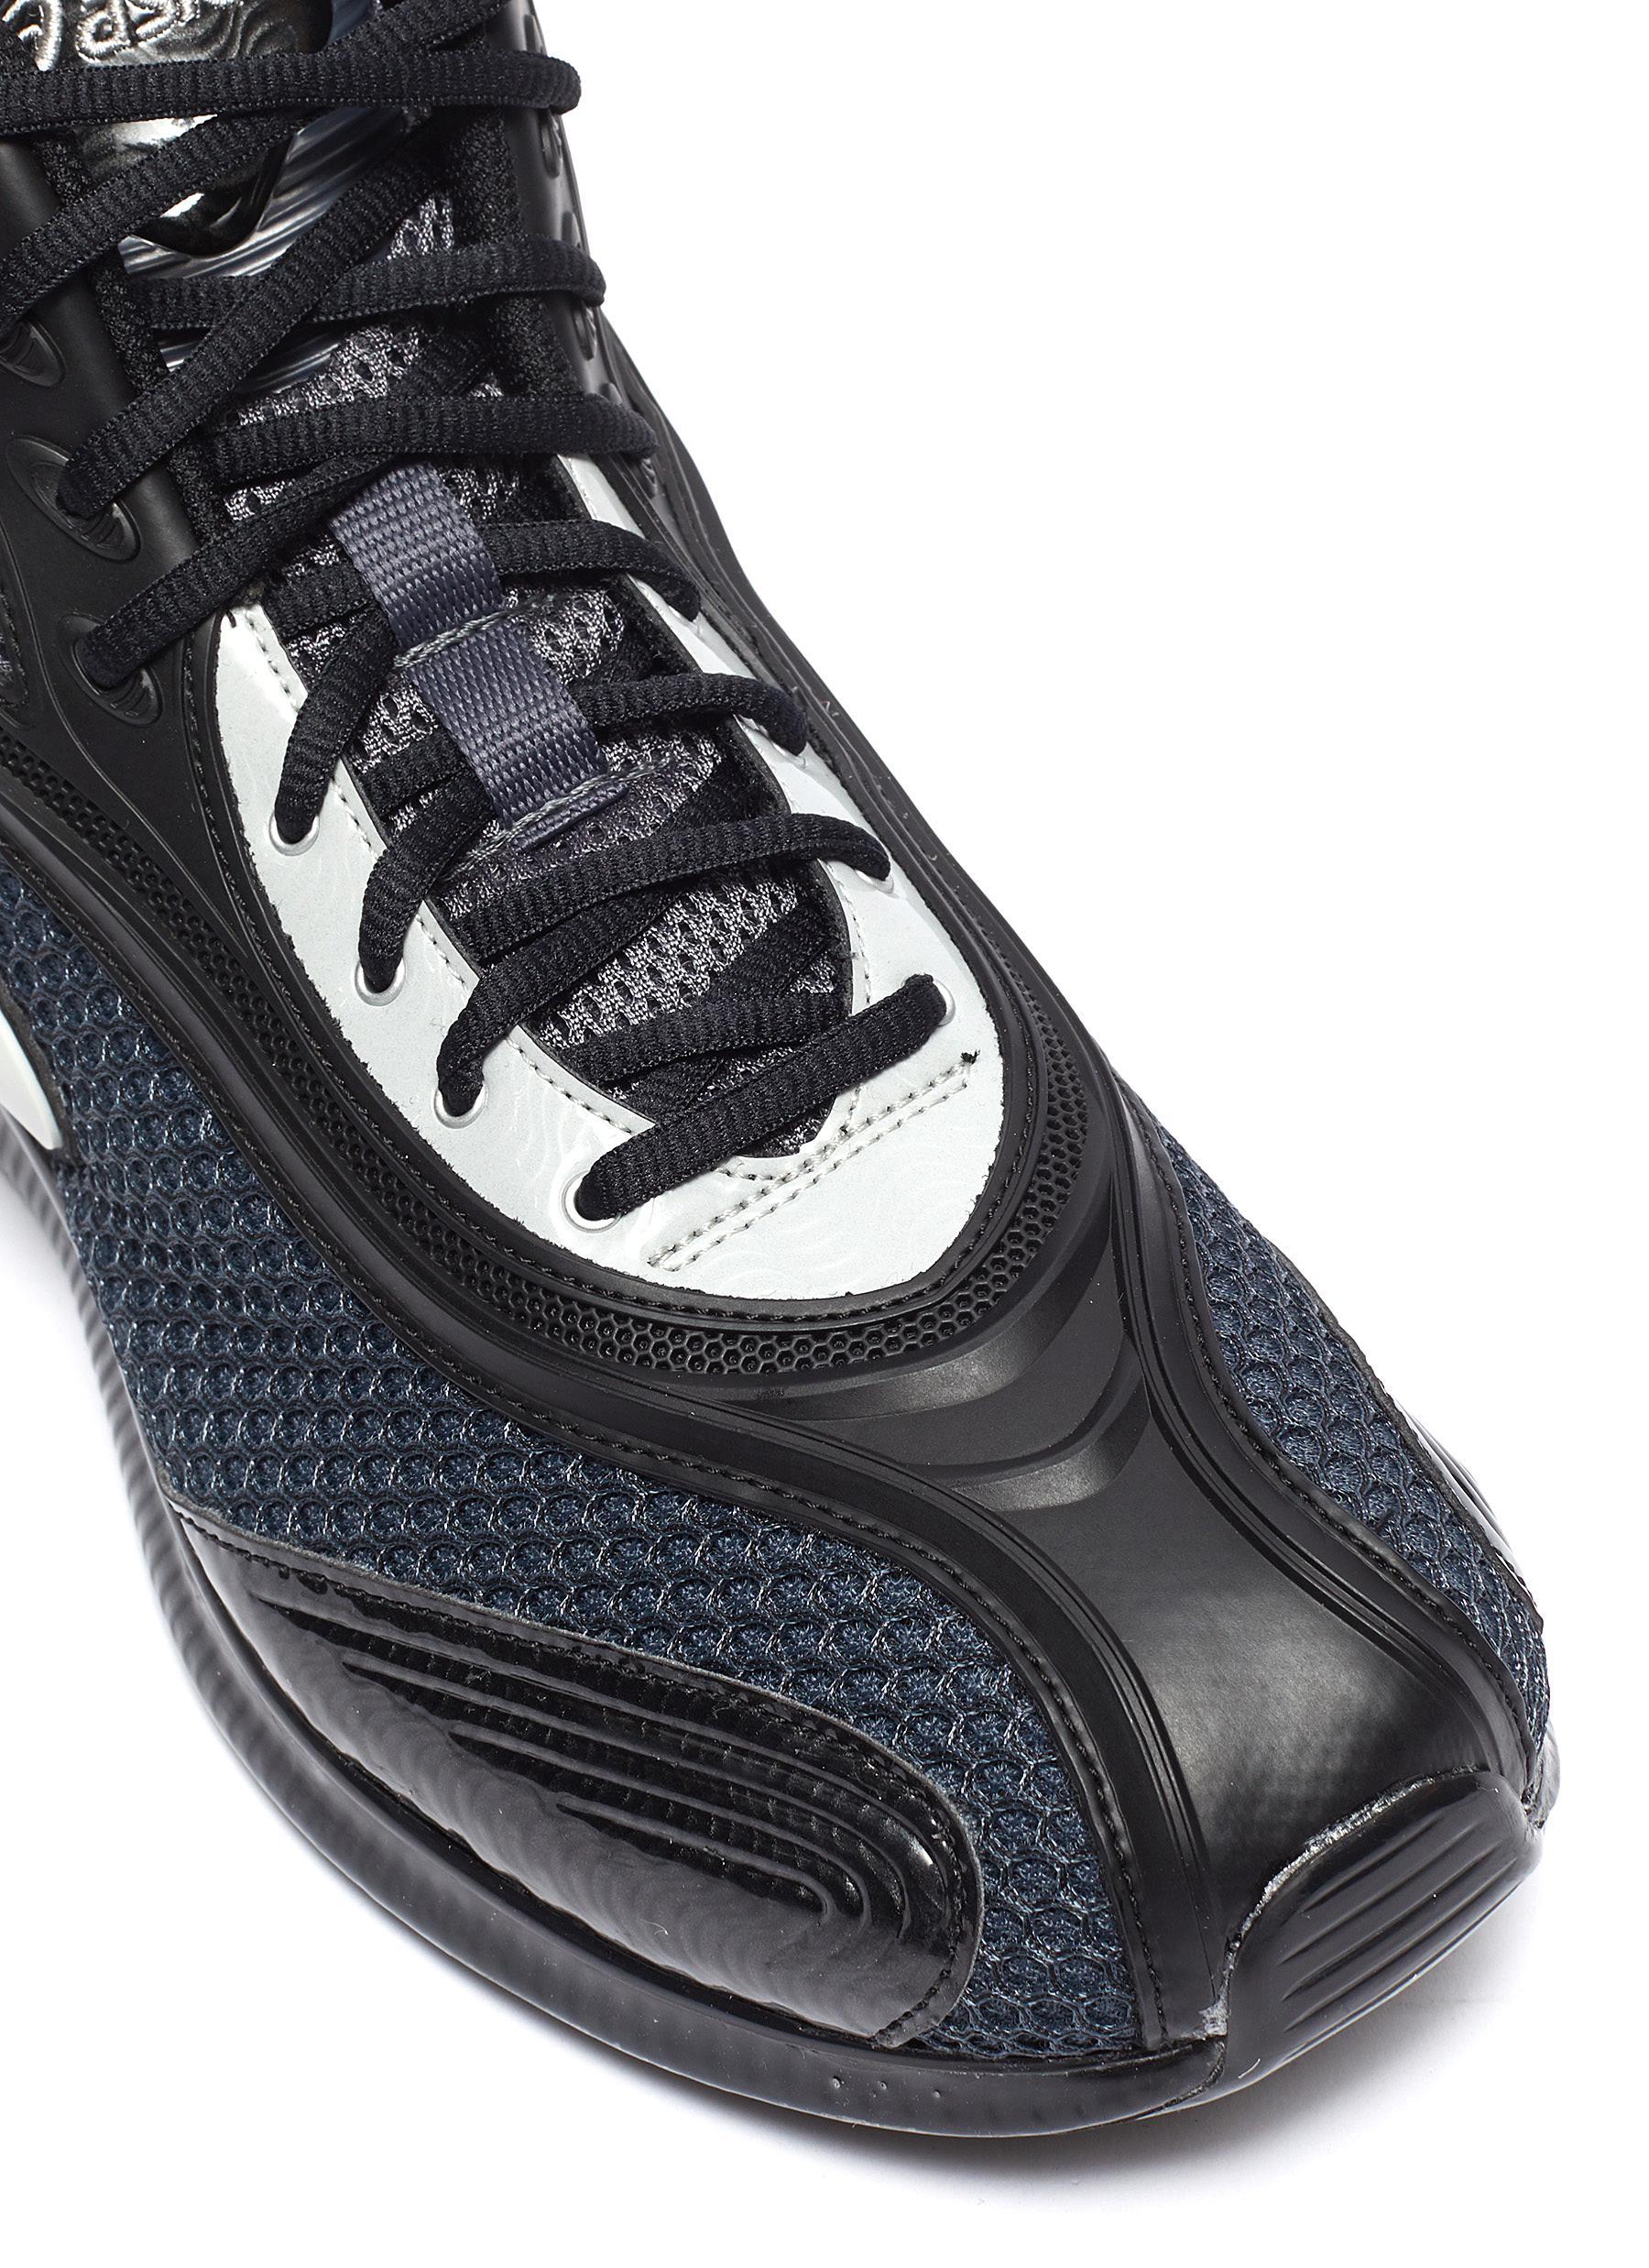 Kiko Kostadinov Rubber X Asics 'gel-sokat Infinity 2' Sneakers for Men